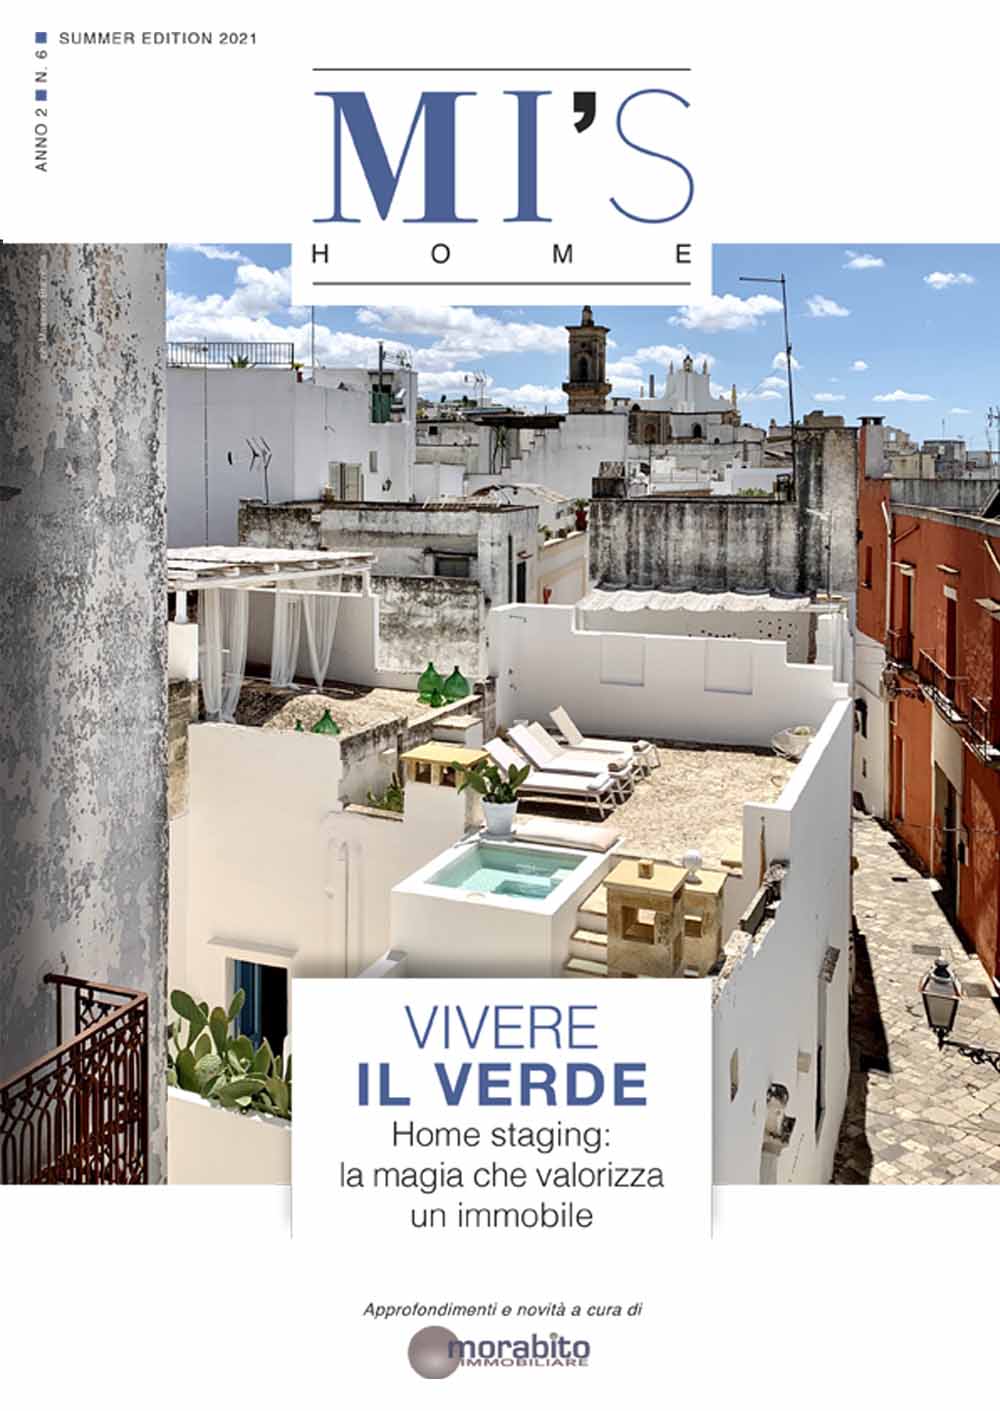 mishome-summer-edition-2021-magazine-immobiliare.jpg